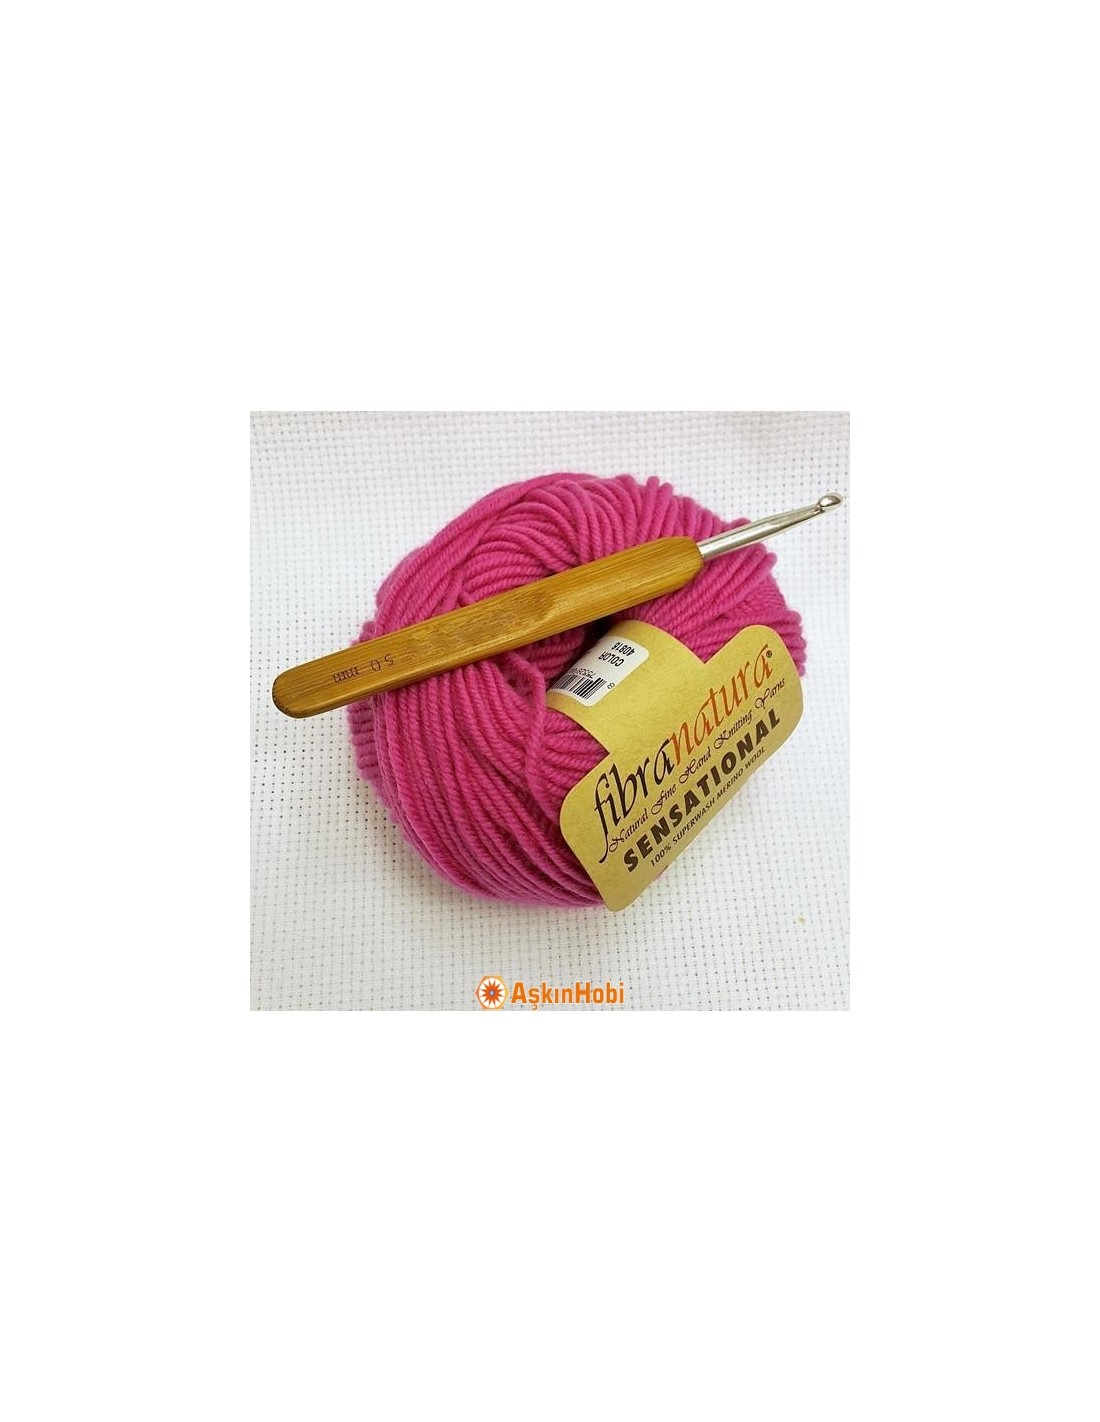 Bamboo-handled aluminum crochet 5.00mm